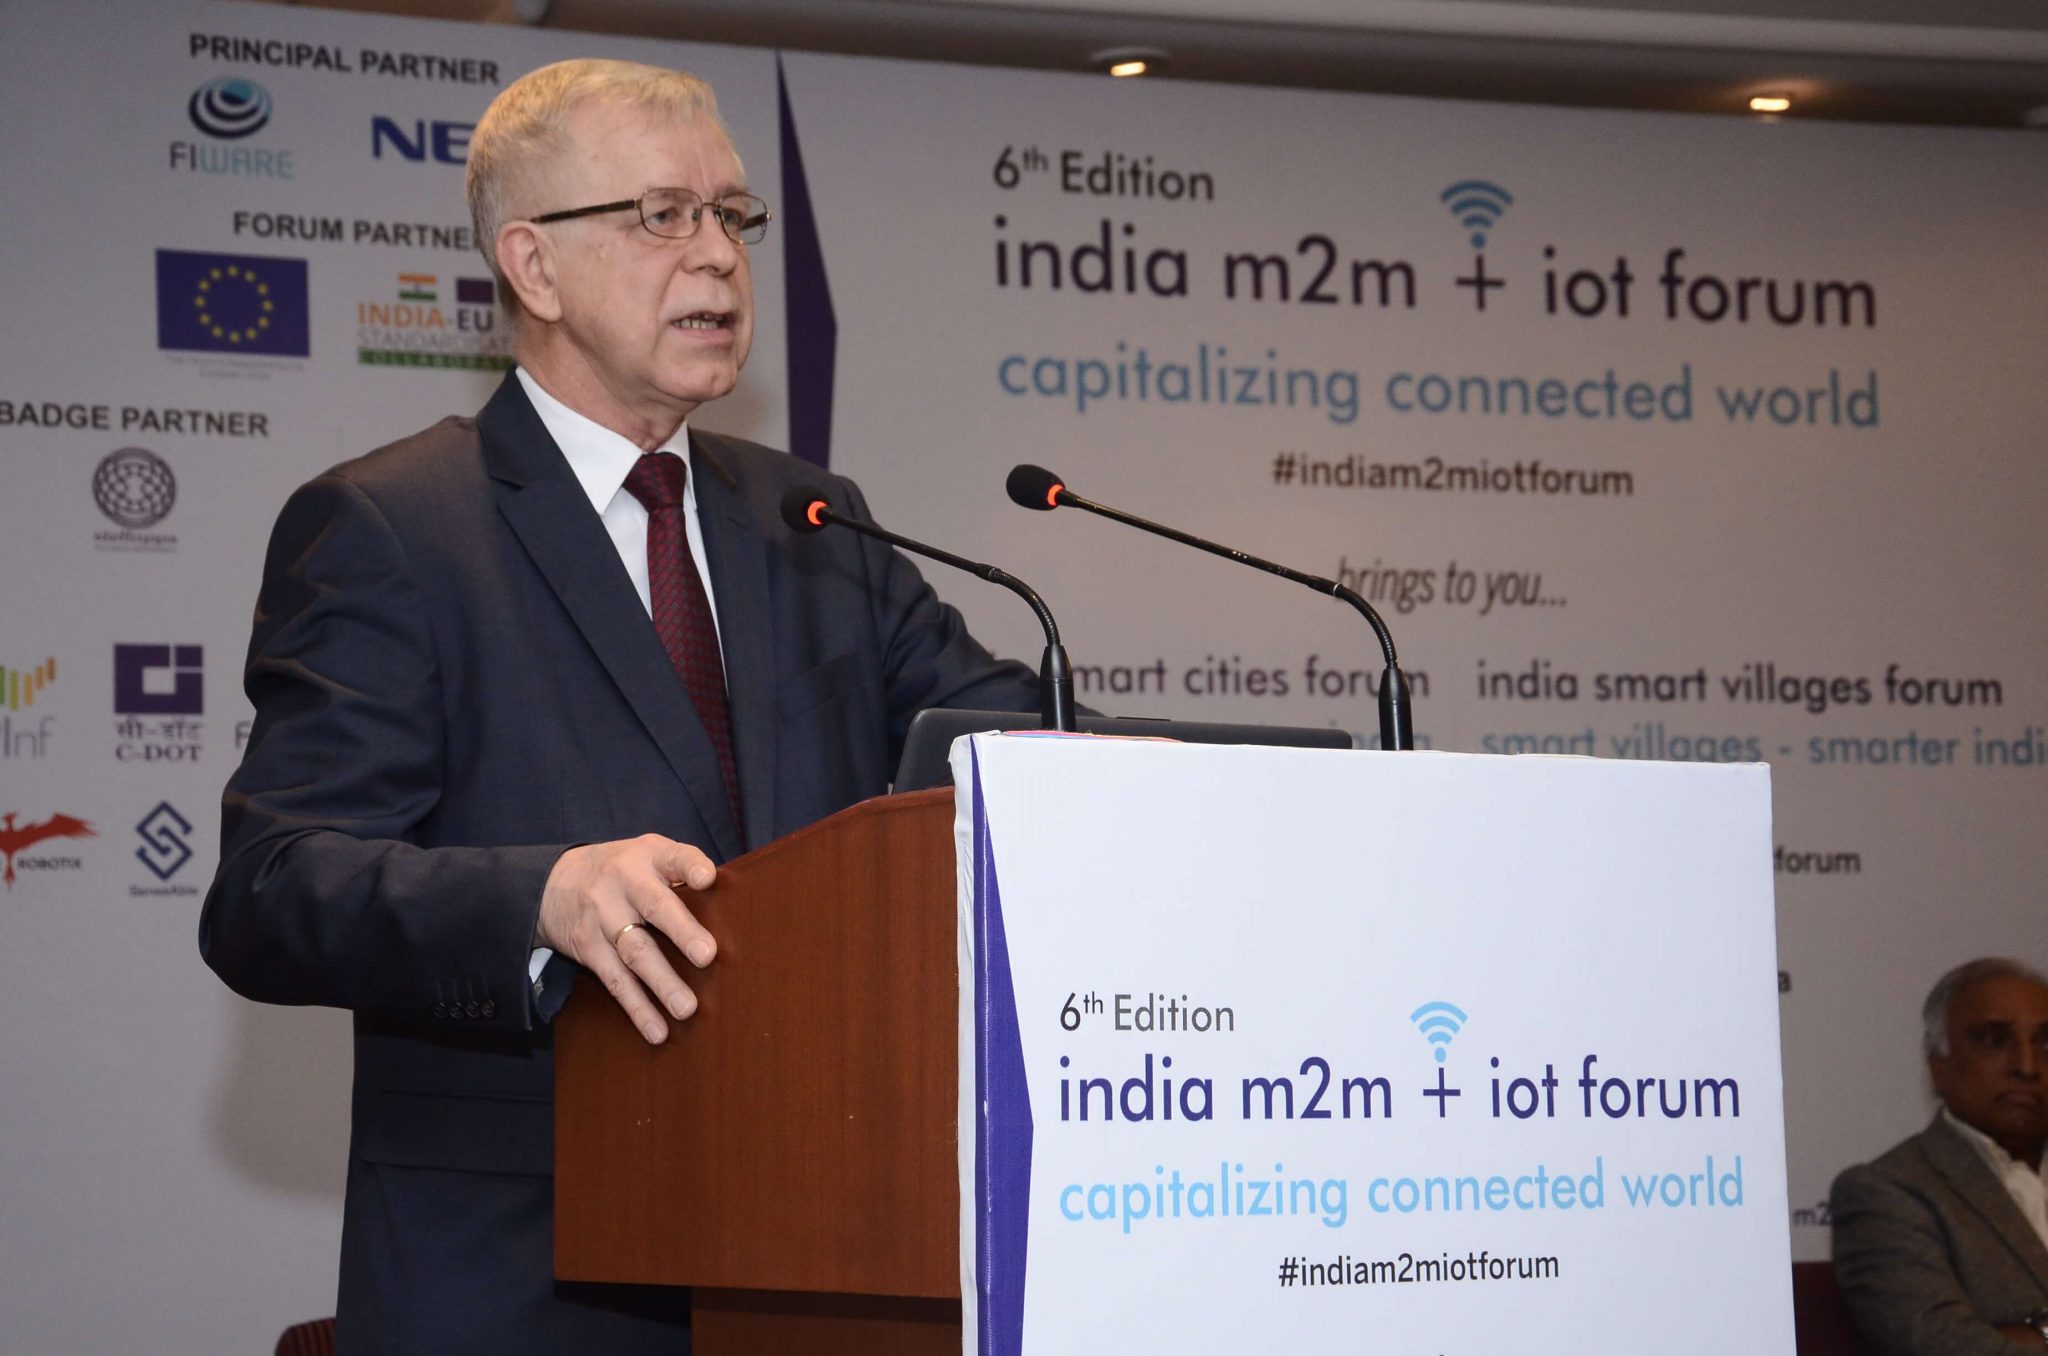 6th Edition of India m2m + iot Forum 2019